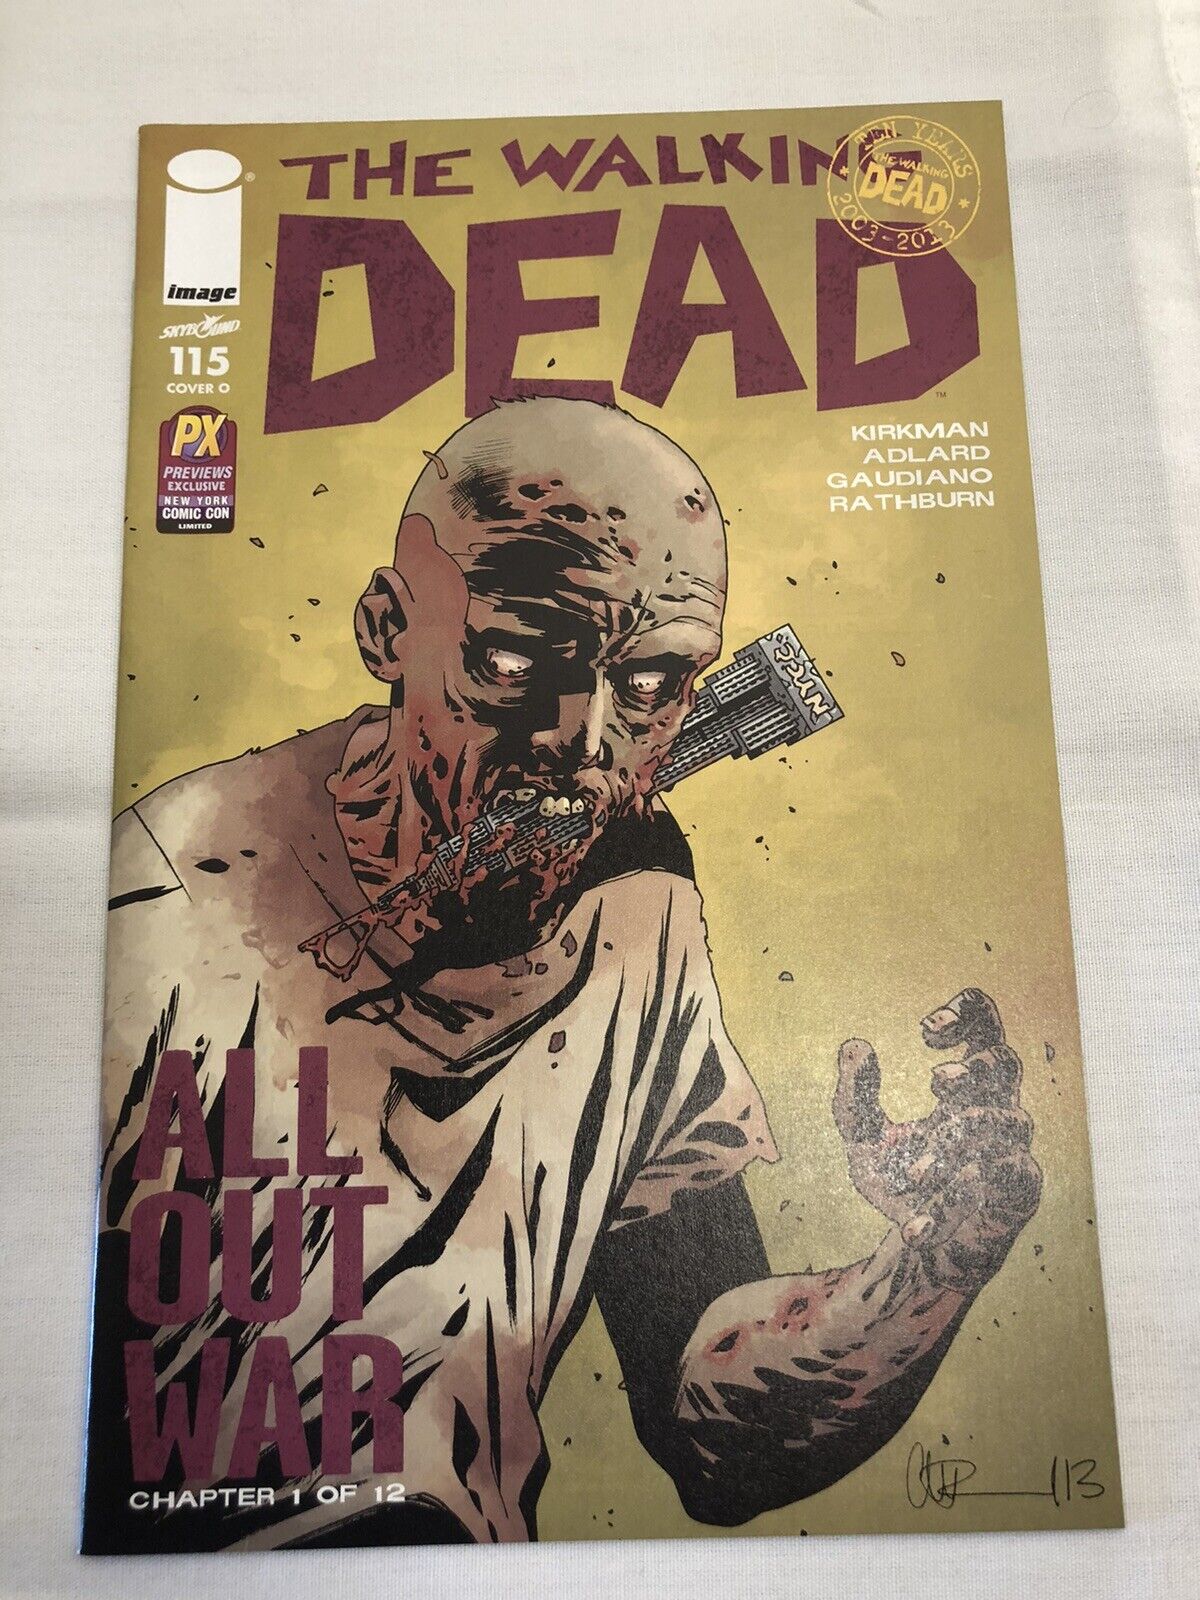 Walking Dead 115 PC NY Comic Con Variant, 10 Yr anniversary issue, ***